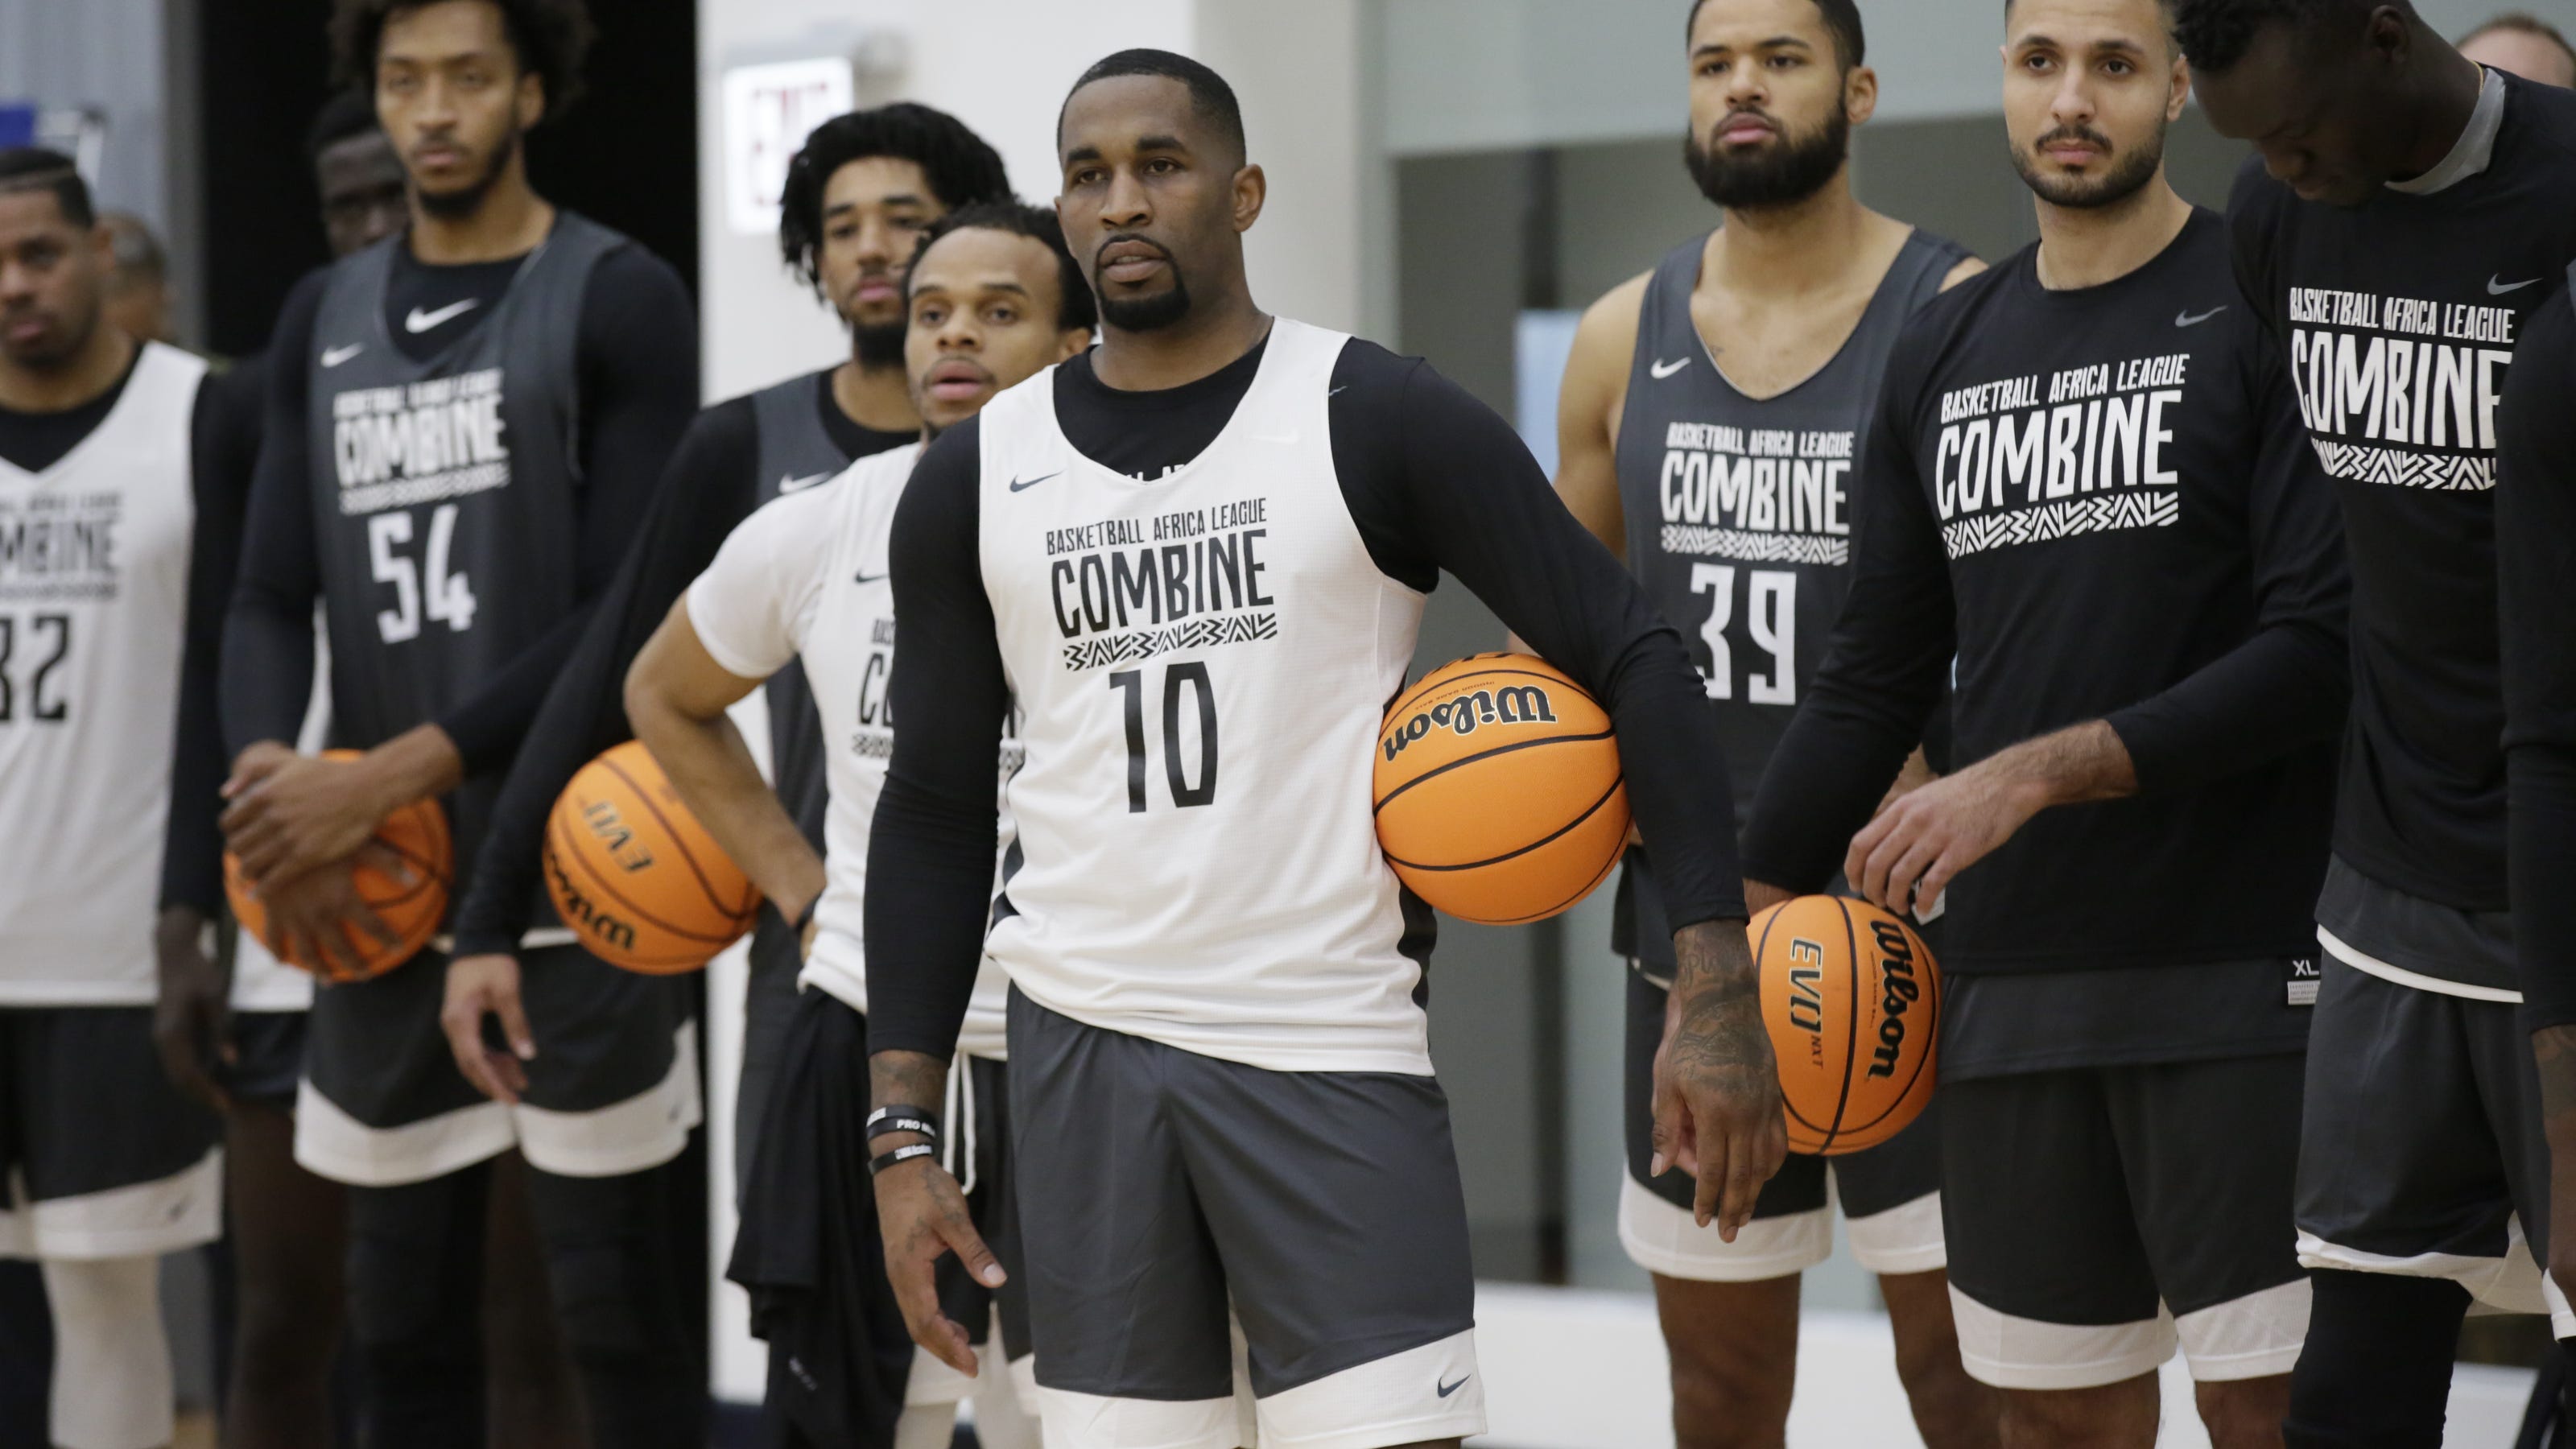 hoofdpijn Trottoir scherp BAL to NBA? Ex-Knicks player Chris Smith seeks 'rebirth' in new league